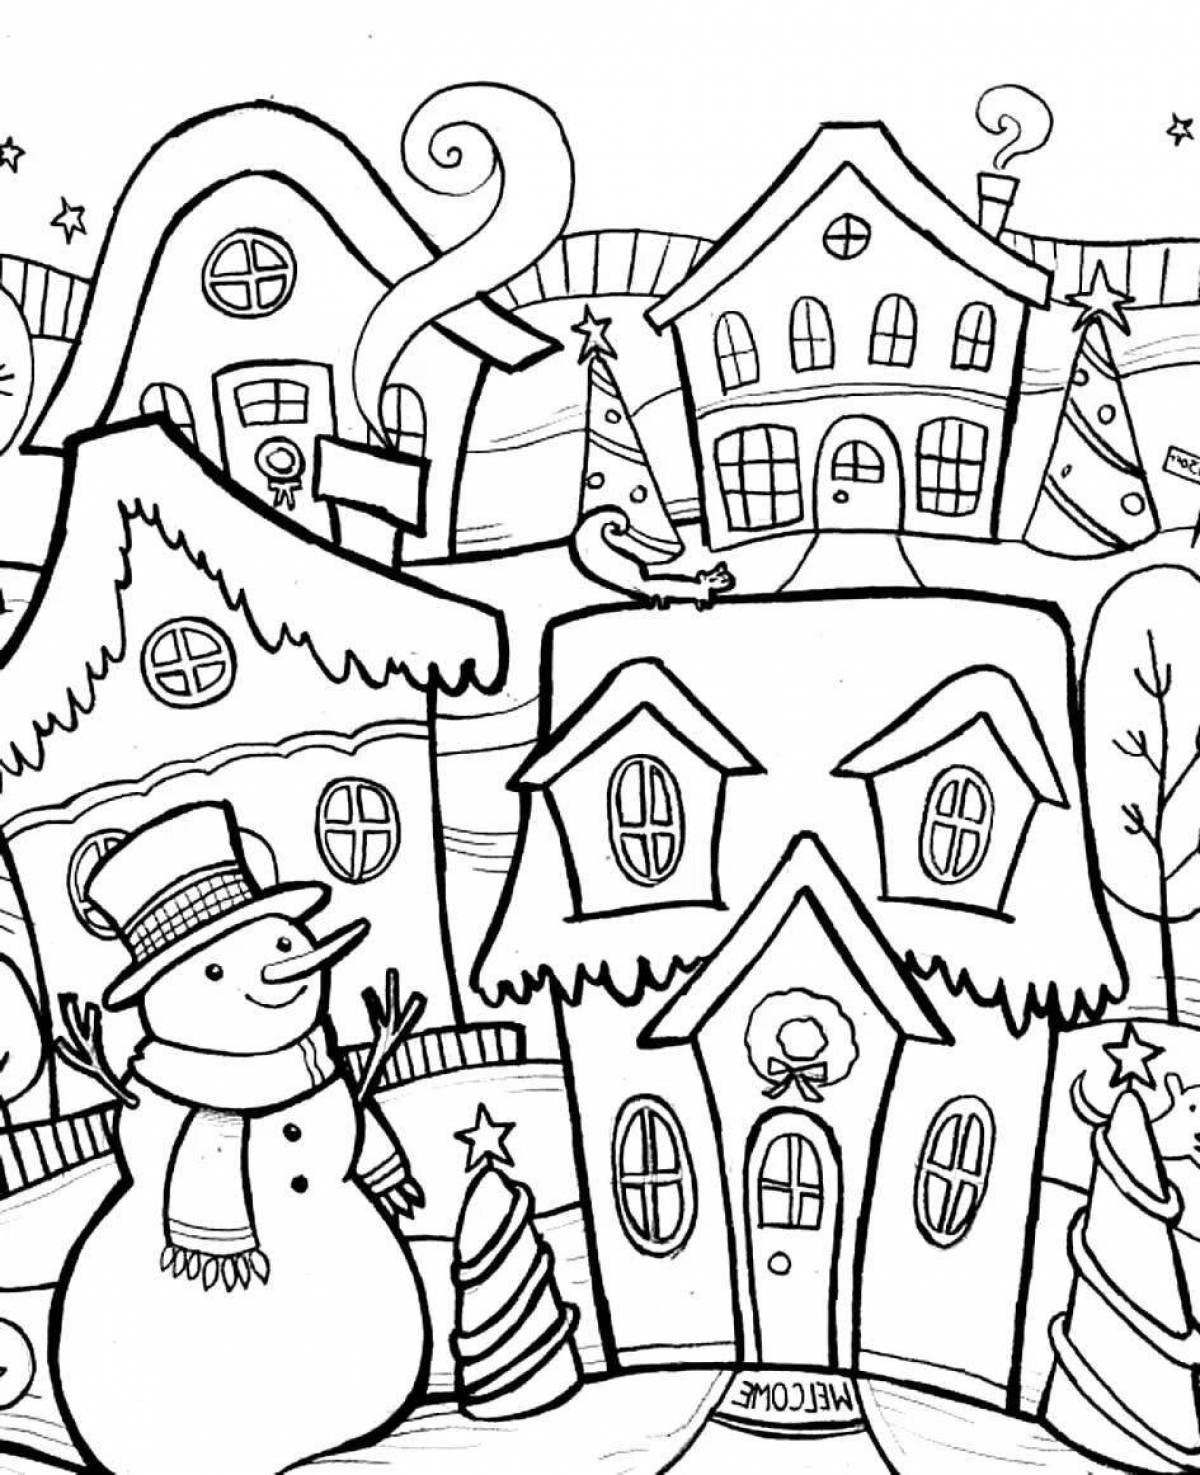 Violent winter city coloring pages for children